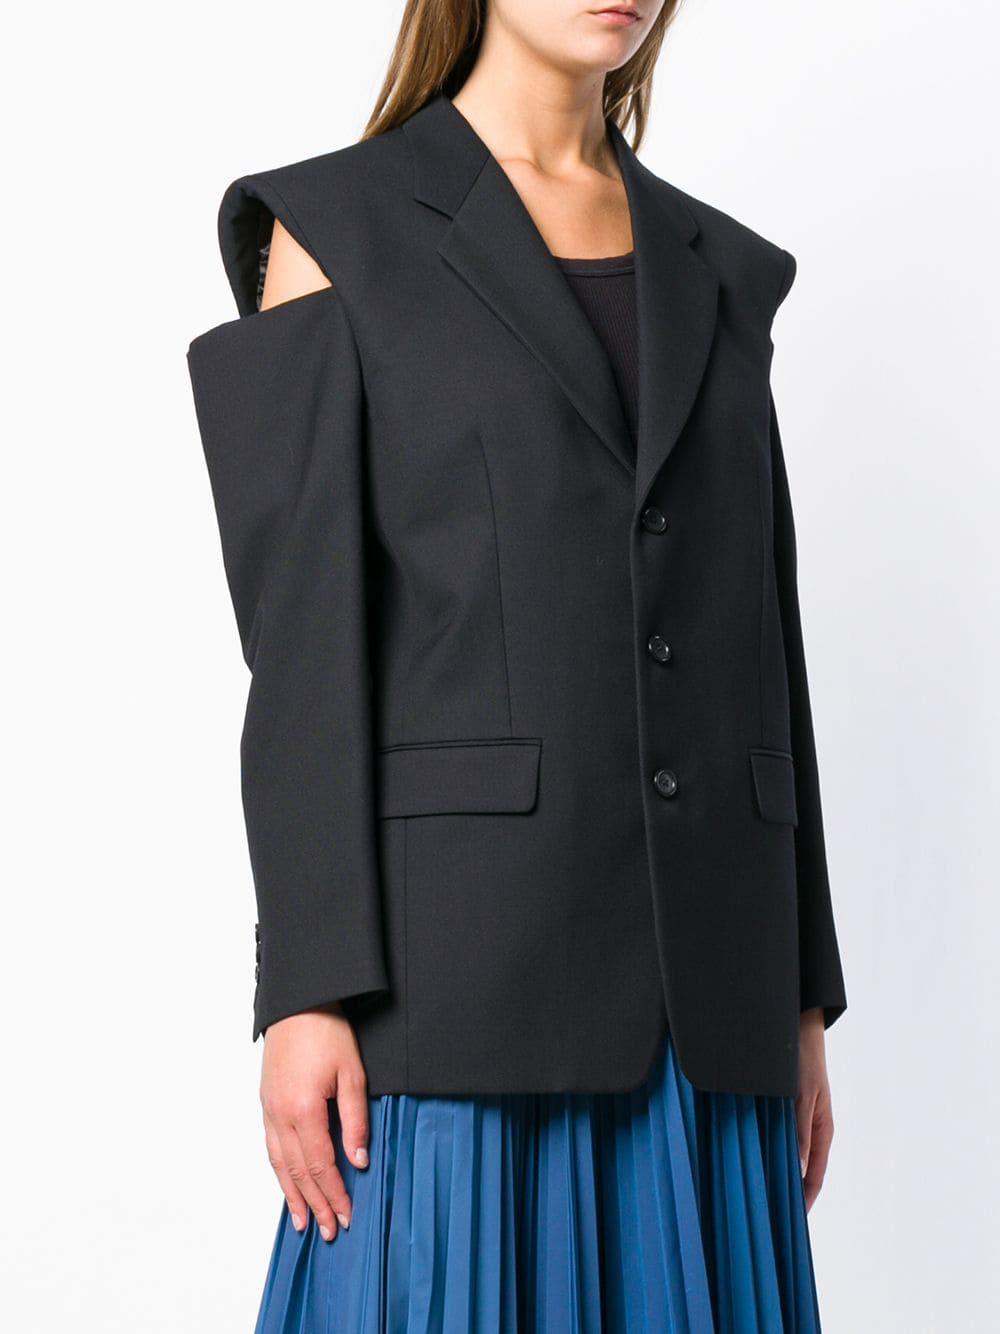 Maison Margiela Wool Cut-out Shoulder Blazer in Black | Lyst